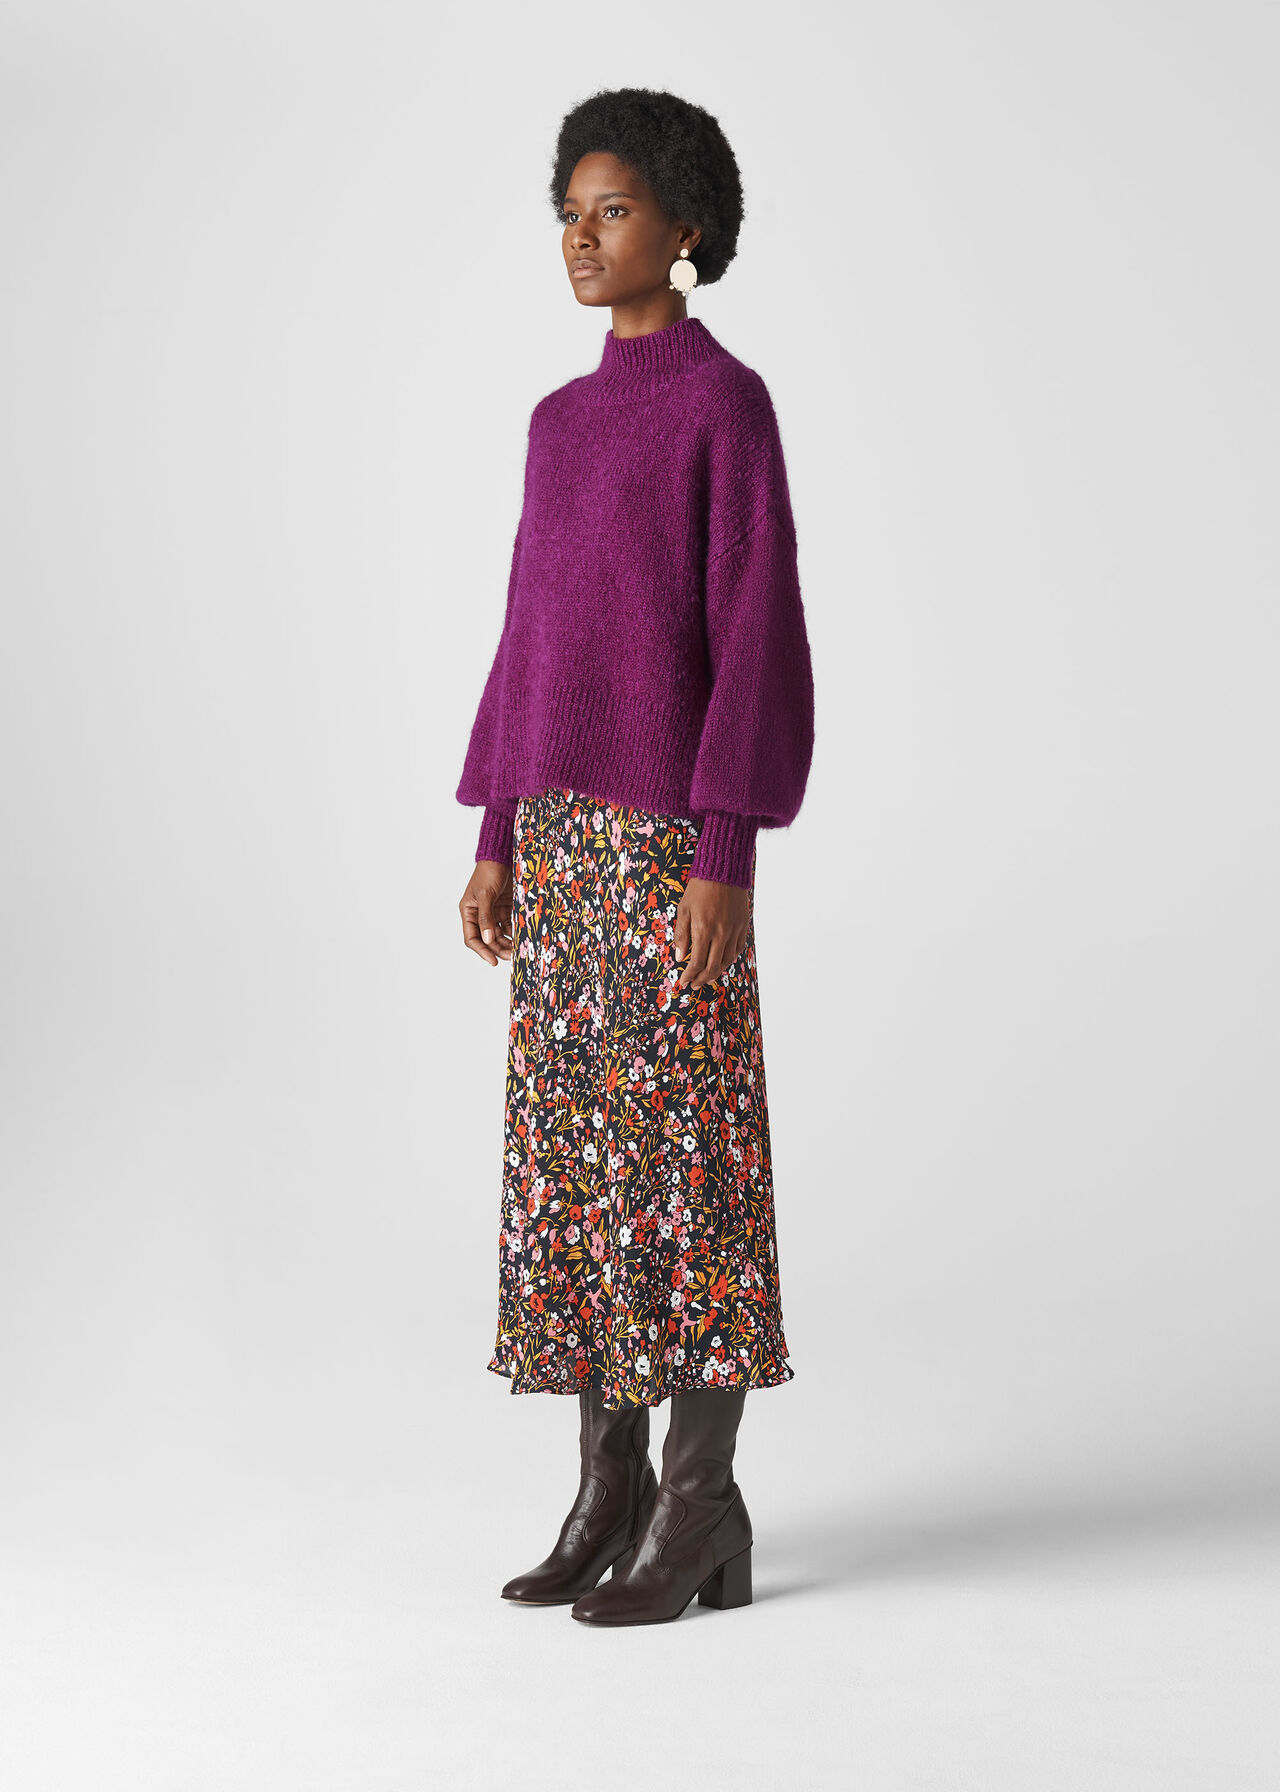 Blouson Sleeve Sweater Purple